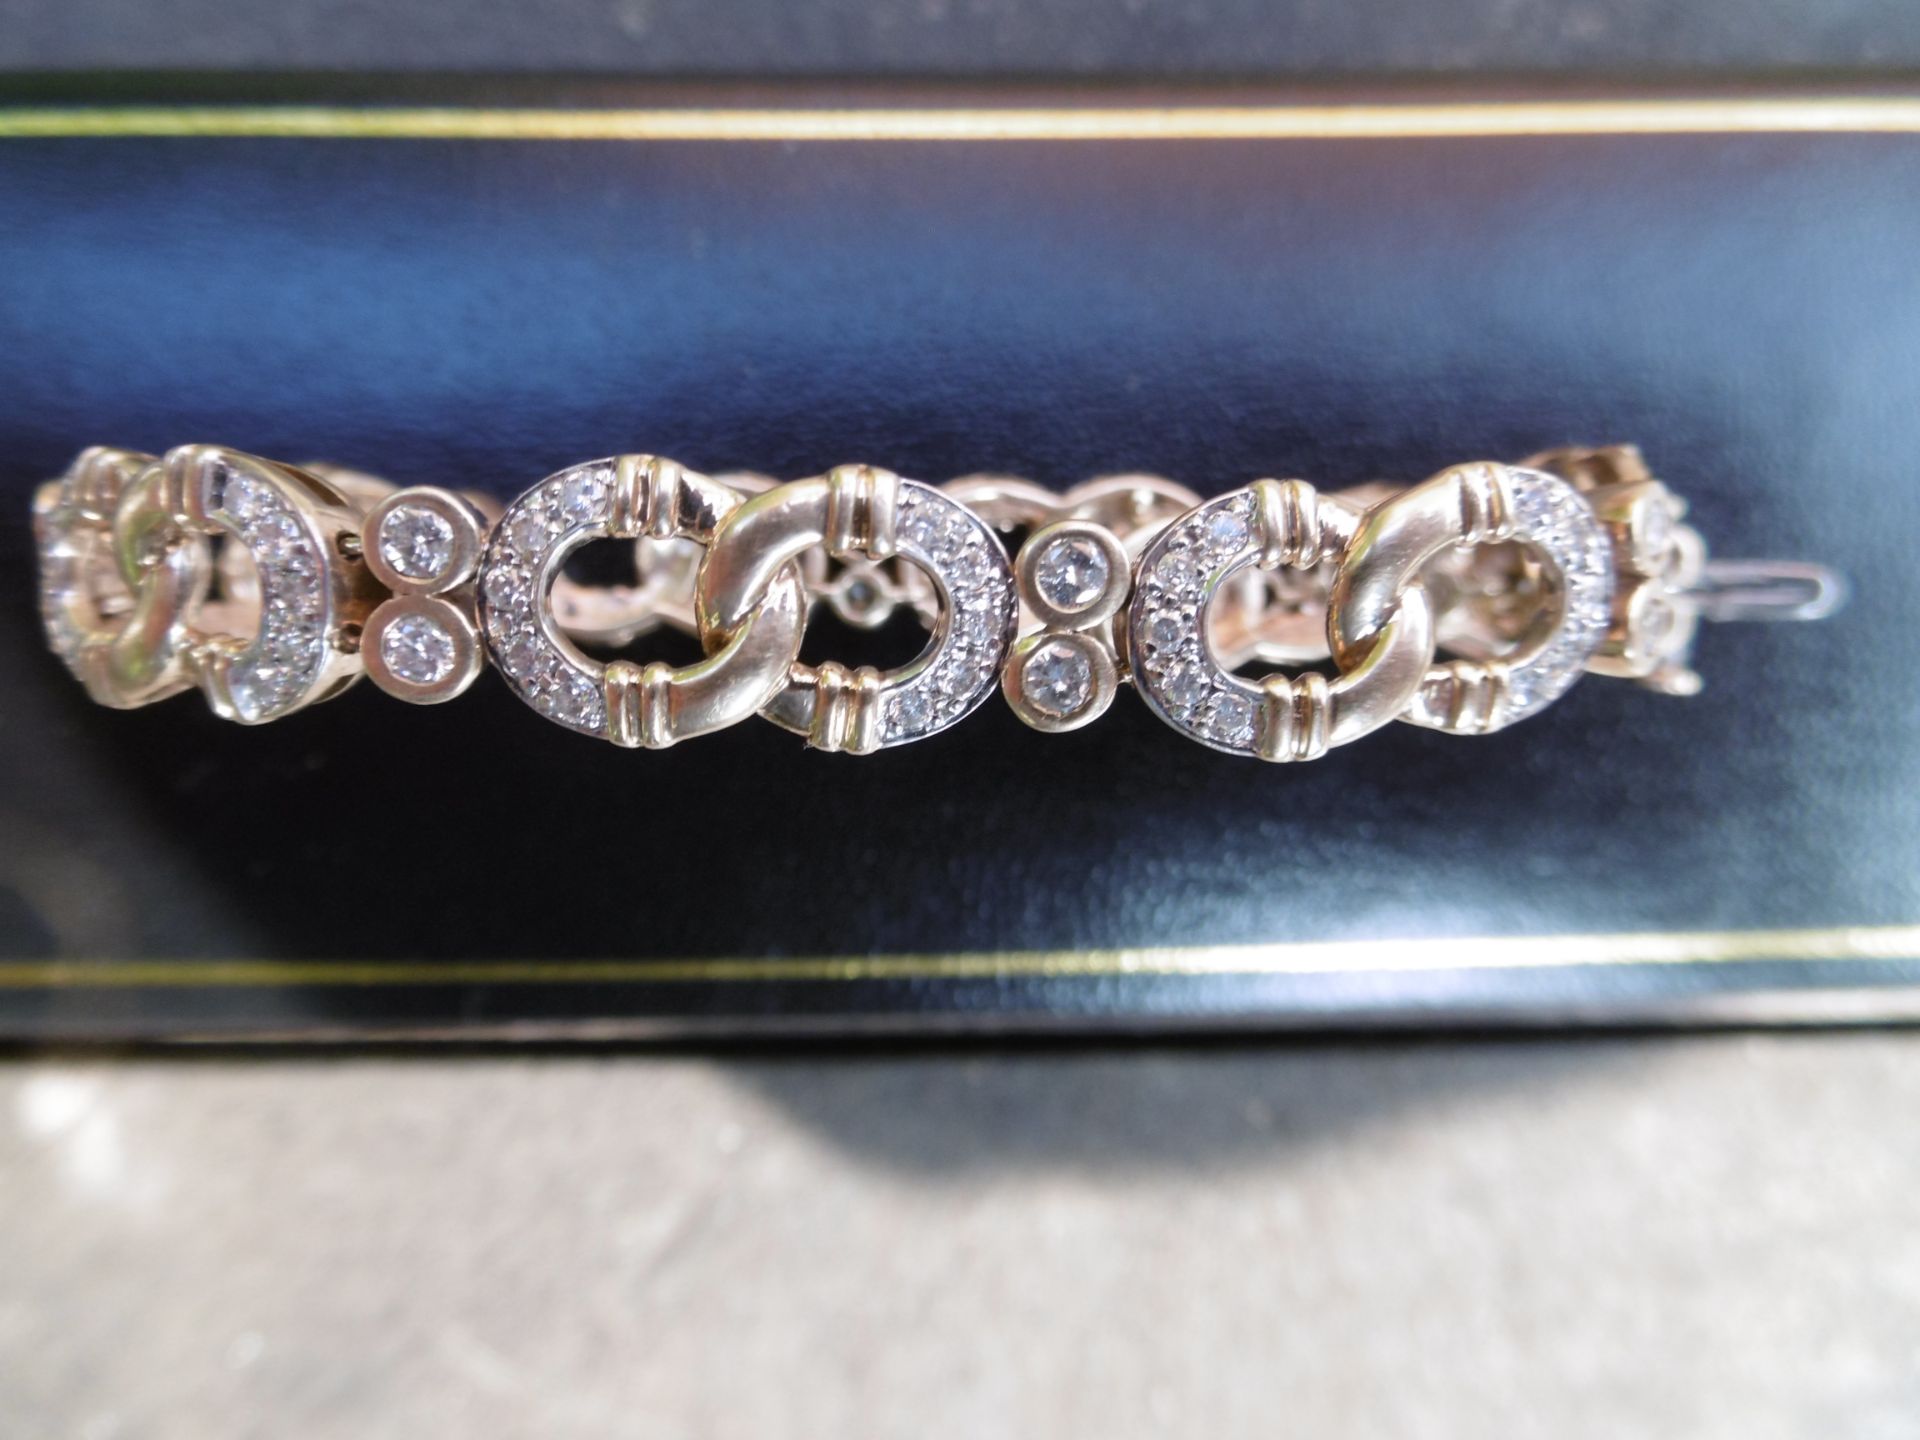 Chanel style Diamond set bracelet - Image 3 of 3